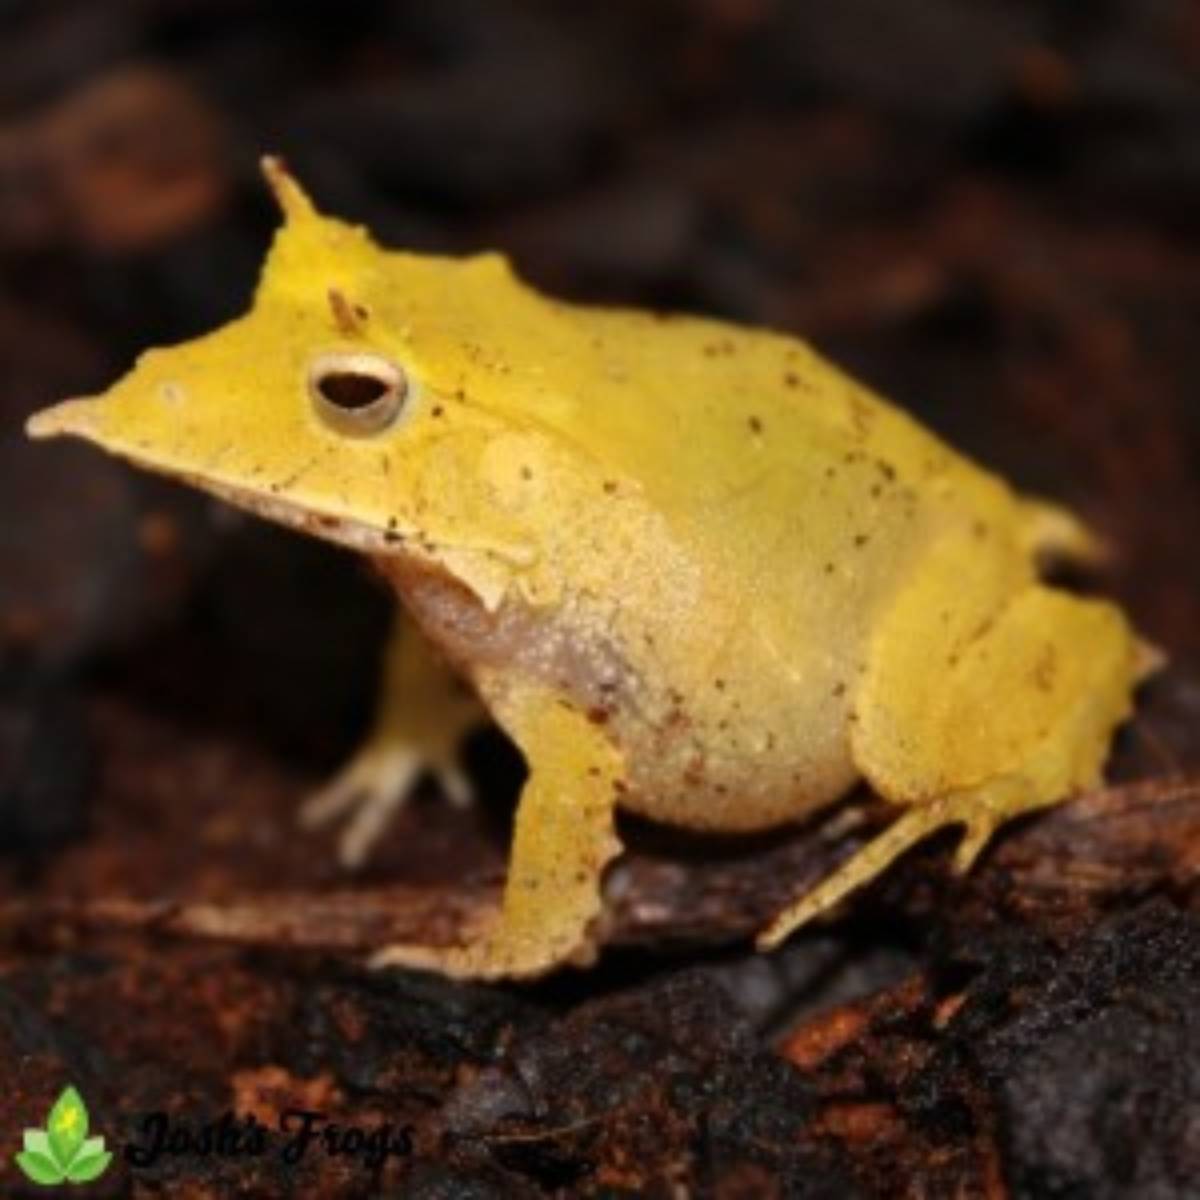 solomon island leaf frog for sale Josh's frogs bright yellow side